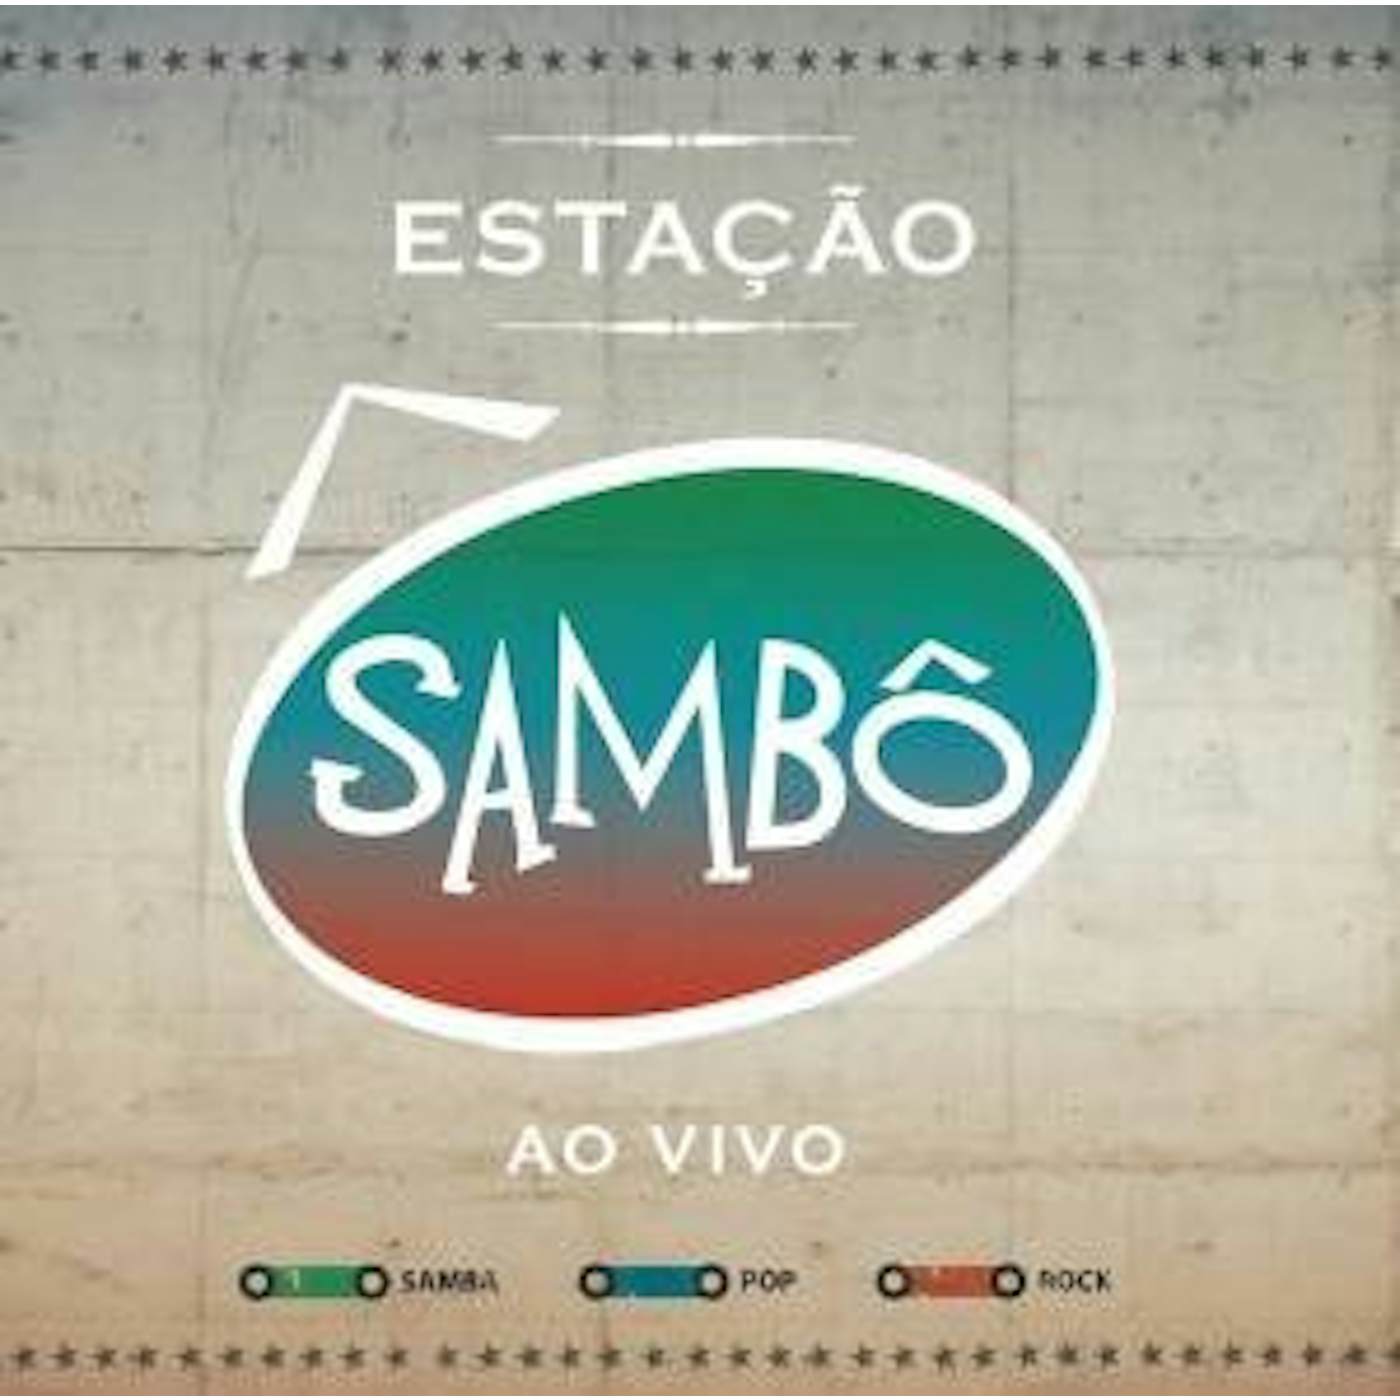 ESTACAO SAMBO CD